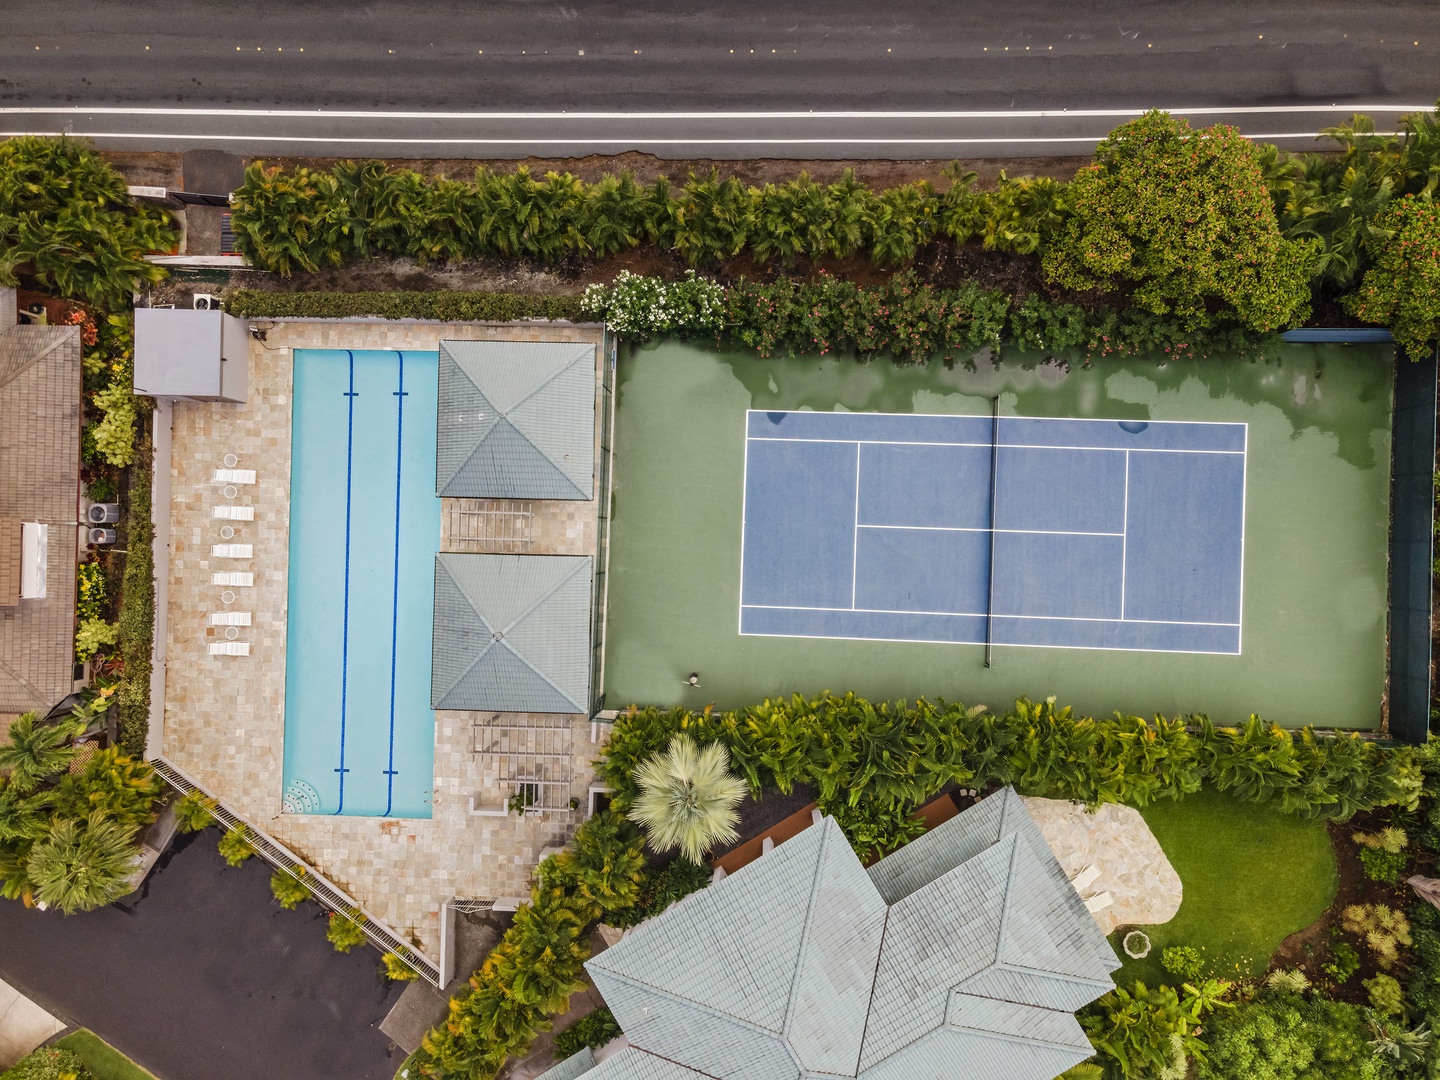 Kailua Kona Vacation Rentals, Ali'i Point #7 - Aerial Tennis Court and Pool